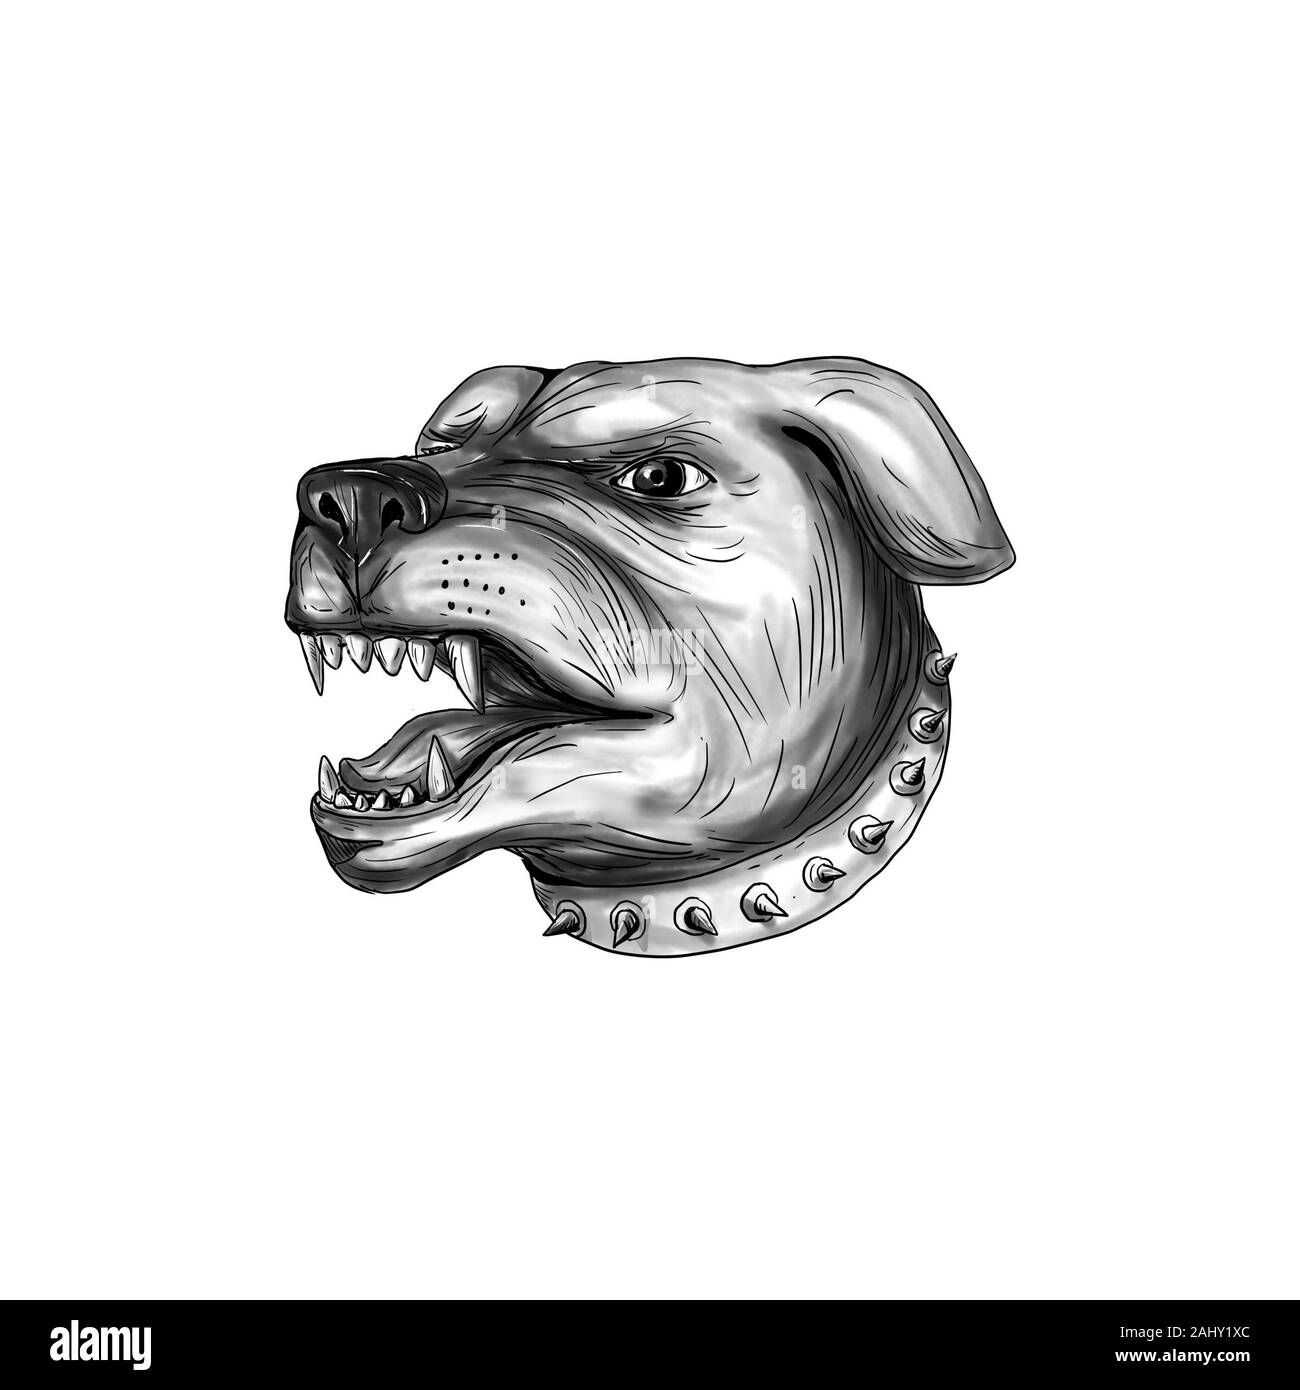 Tattoo style illustration of a Rottweiler Metzgerhund mastiff-dog guard dog head showing teeth growling set on isolated white background. Stock Photo